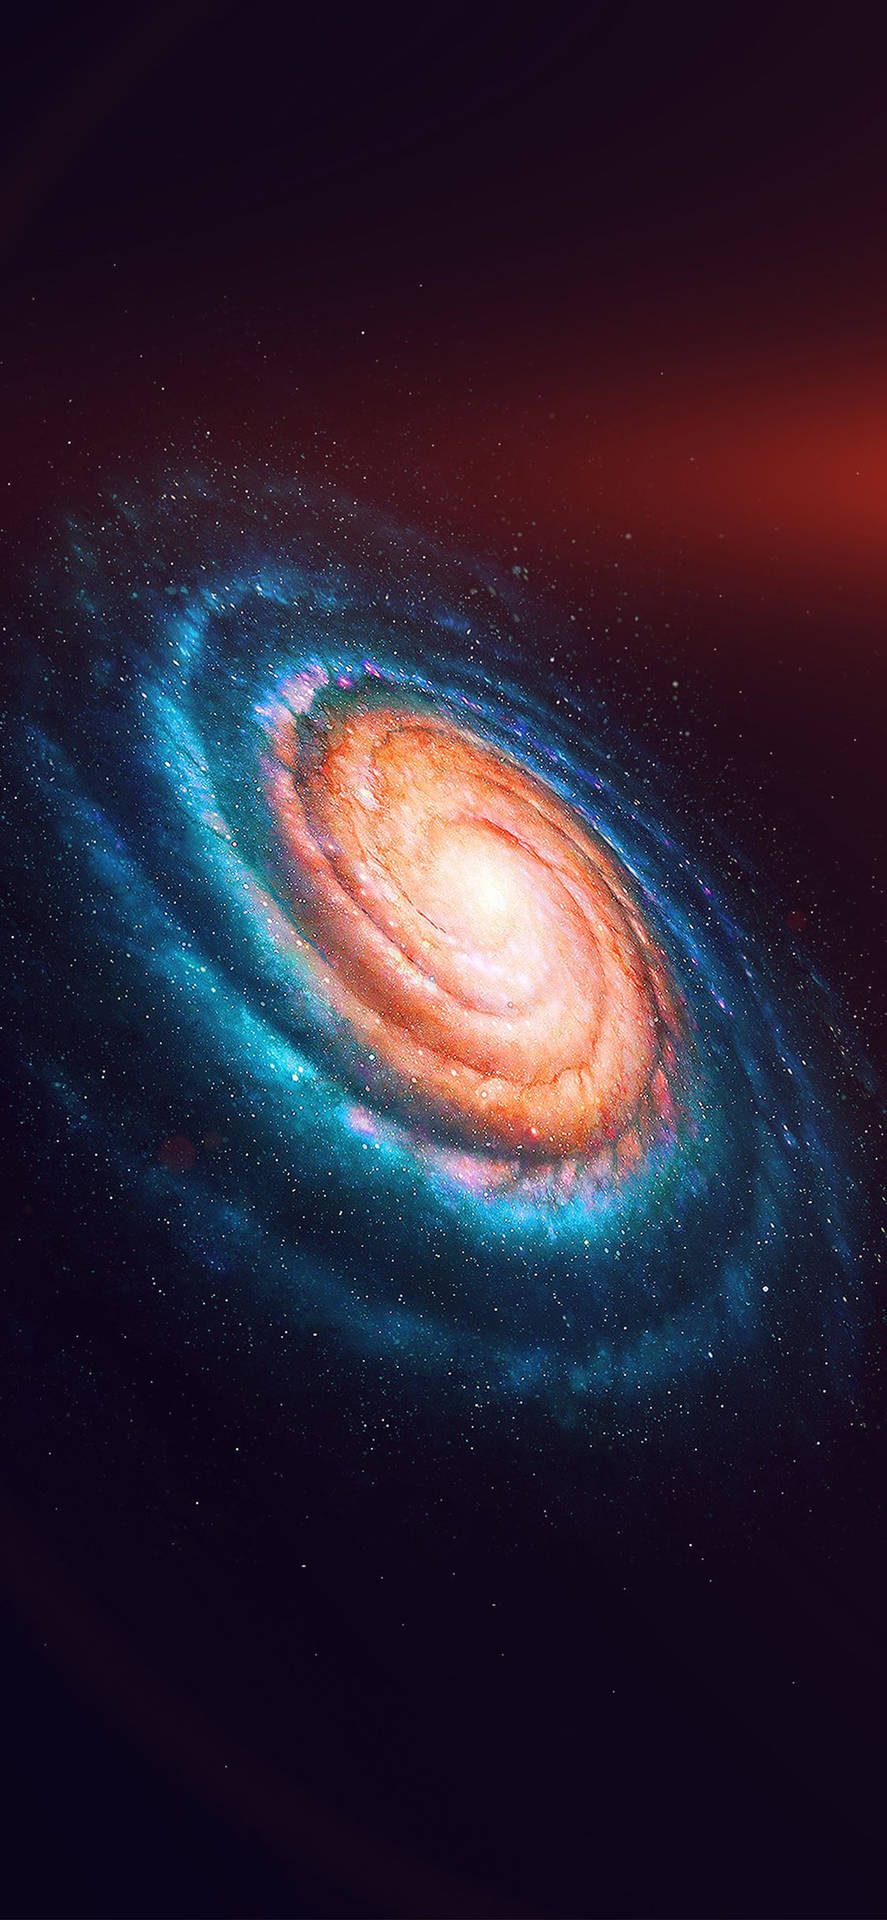 Download Milky Way Galaxy In Space Iphone Wallpaper | Wallpapers.com